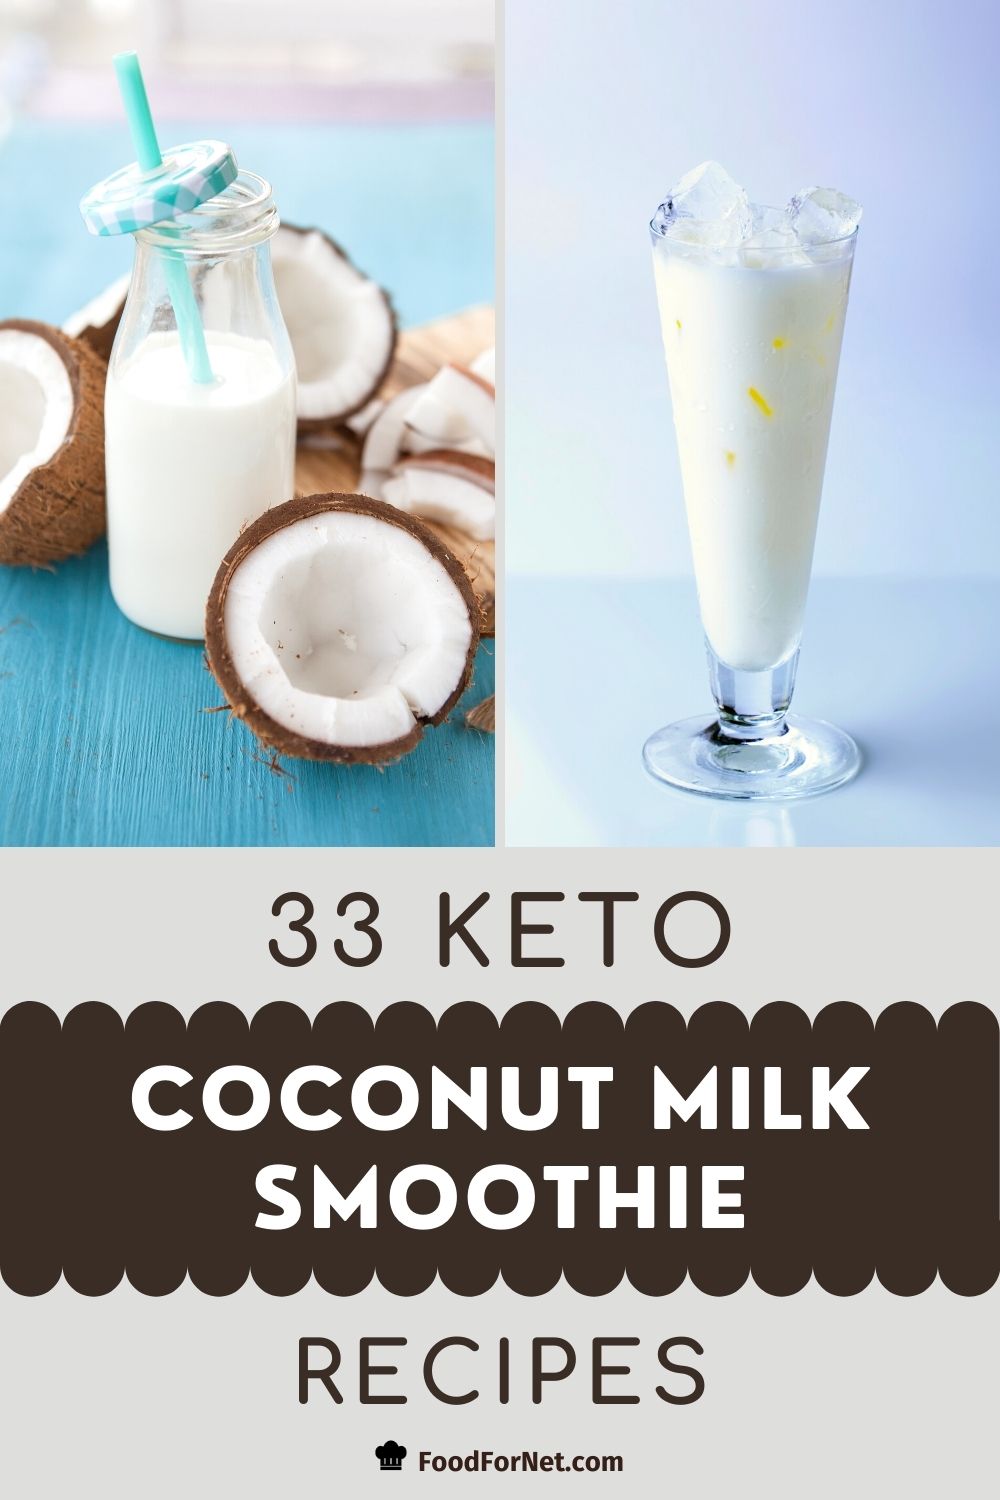 Keto Coconut Milk Recipes: A Delicious and Healthy Option